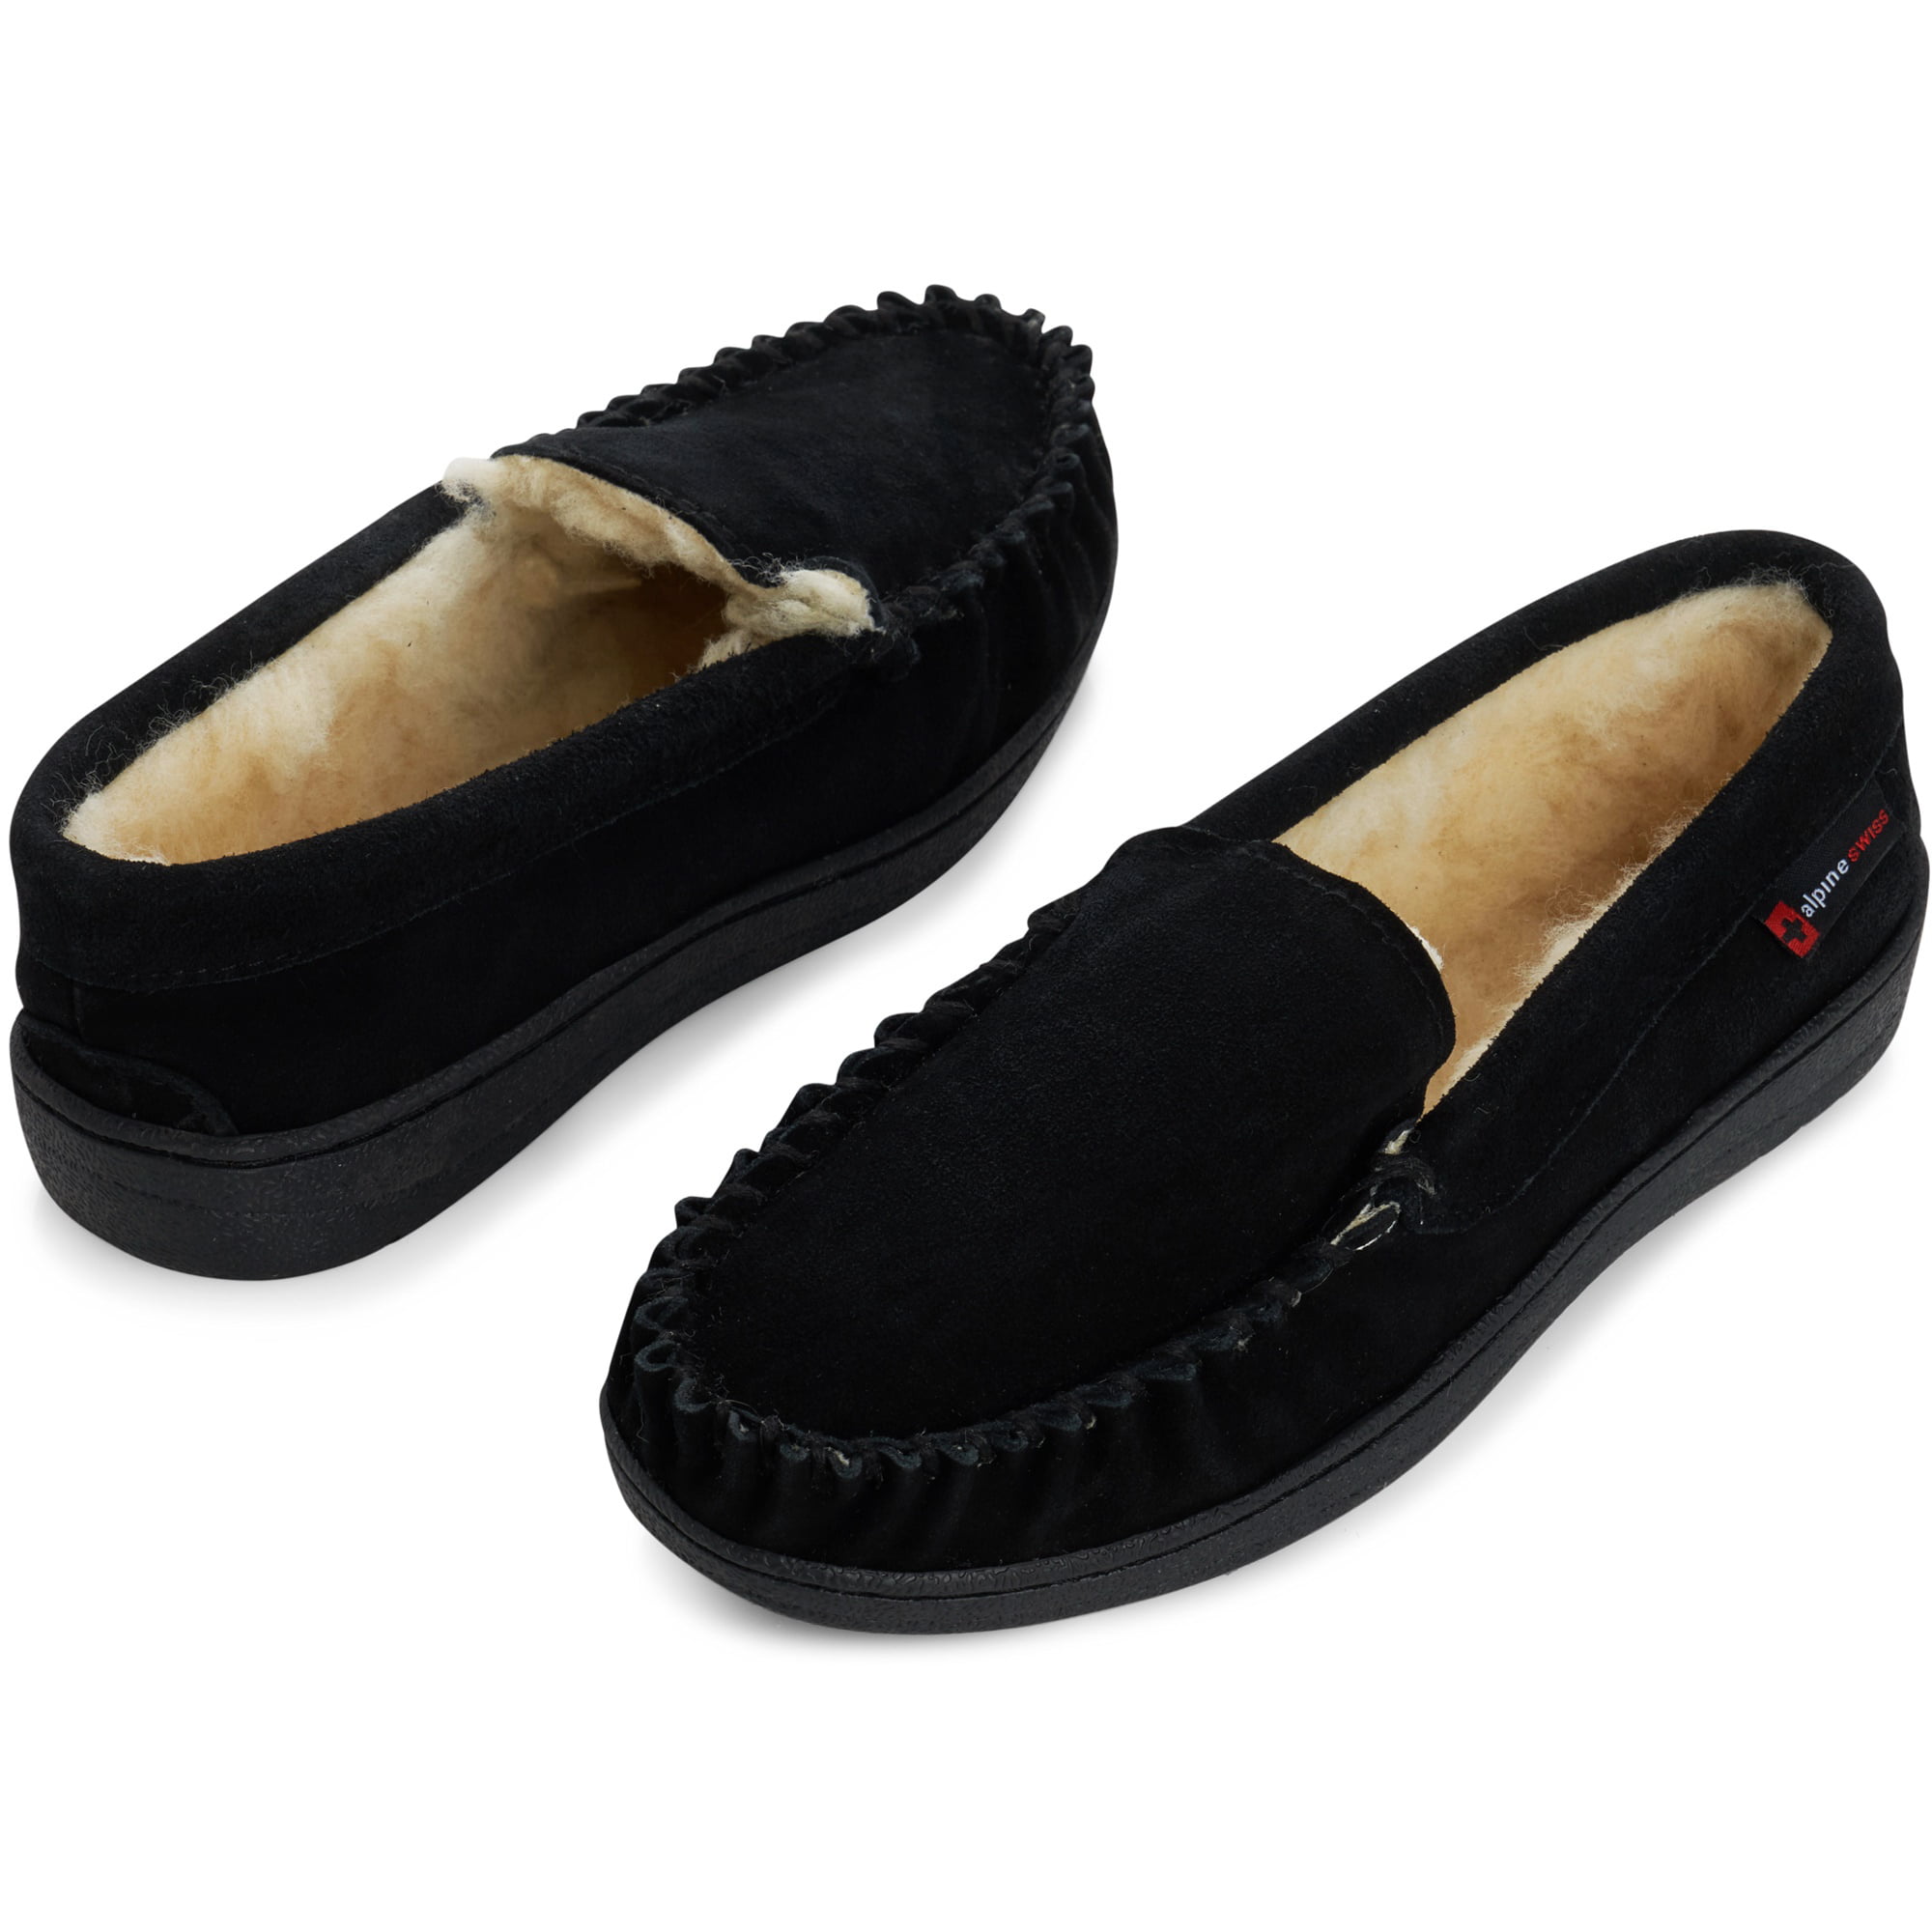 alpine swiss yukon mens suede shearling moccasin slippers moc toe slip on shoes